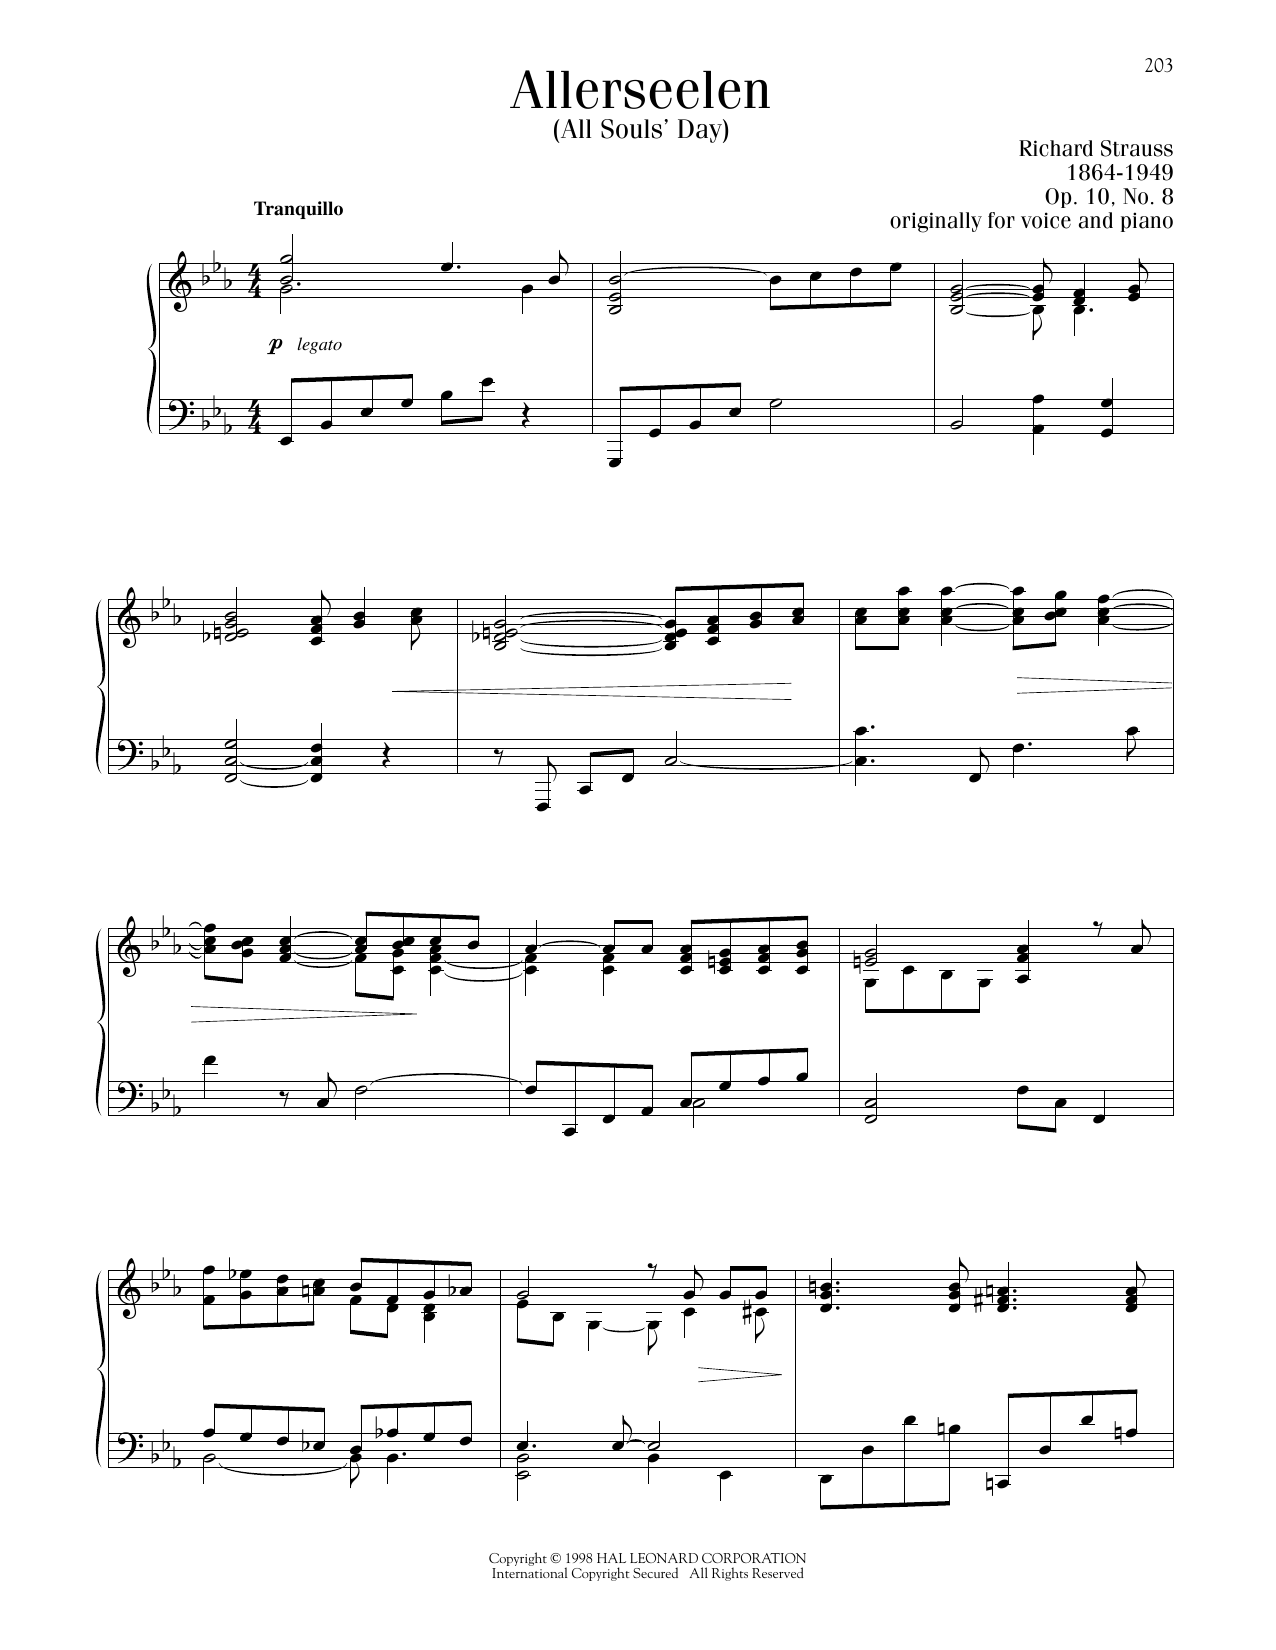 Richard Strauss Allerseelen, Op. 10 (All Souls' Day) sheet music notes printable PDF score